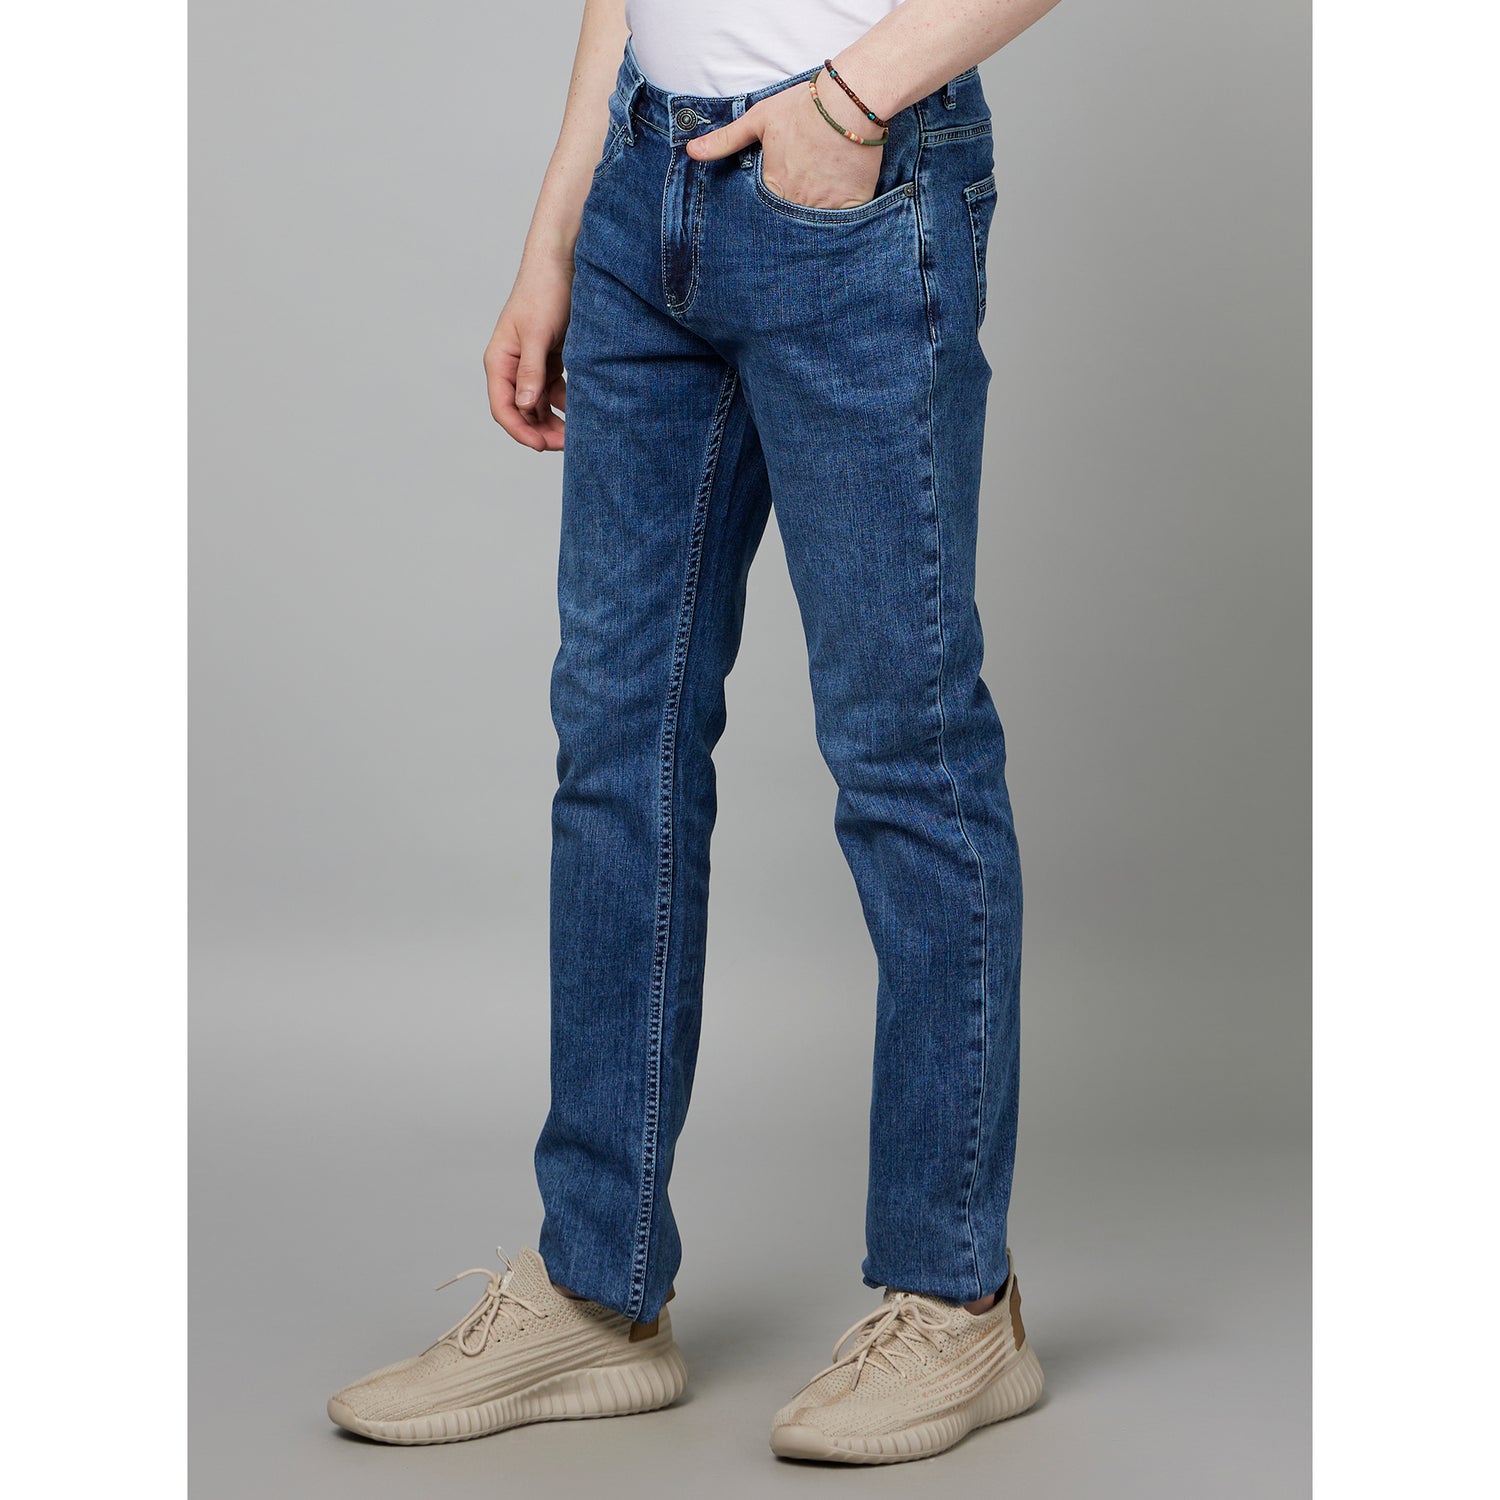 Blue Slim Fit Clean Look Light Fade Jeans (DOBASESTL)